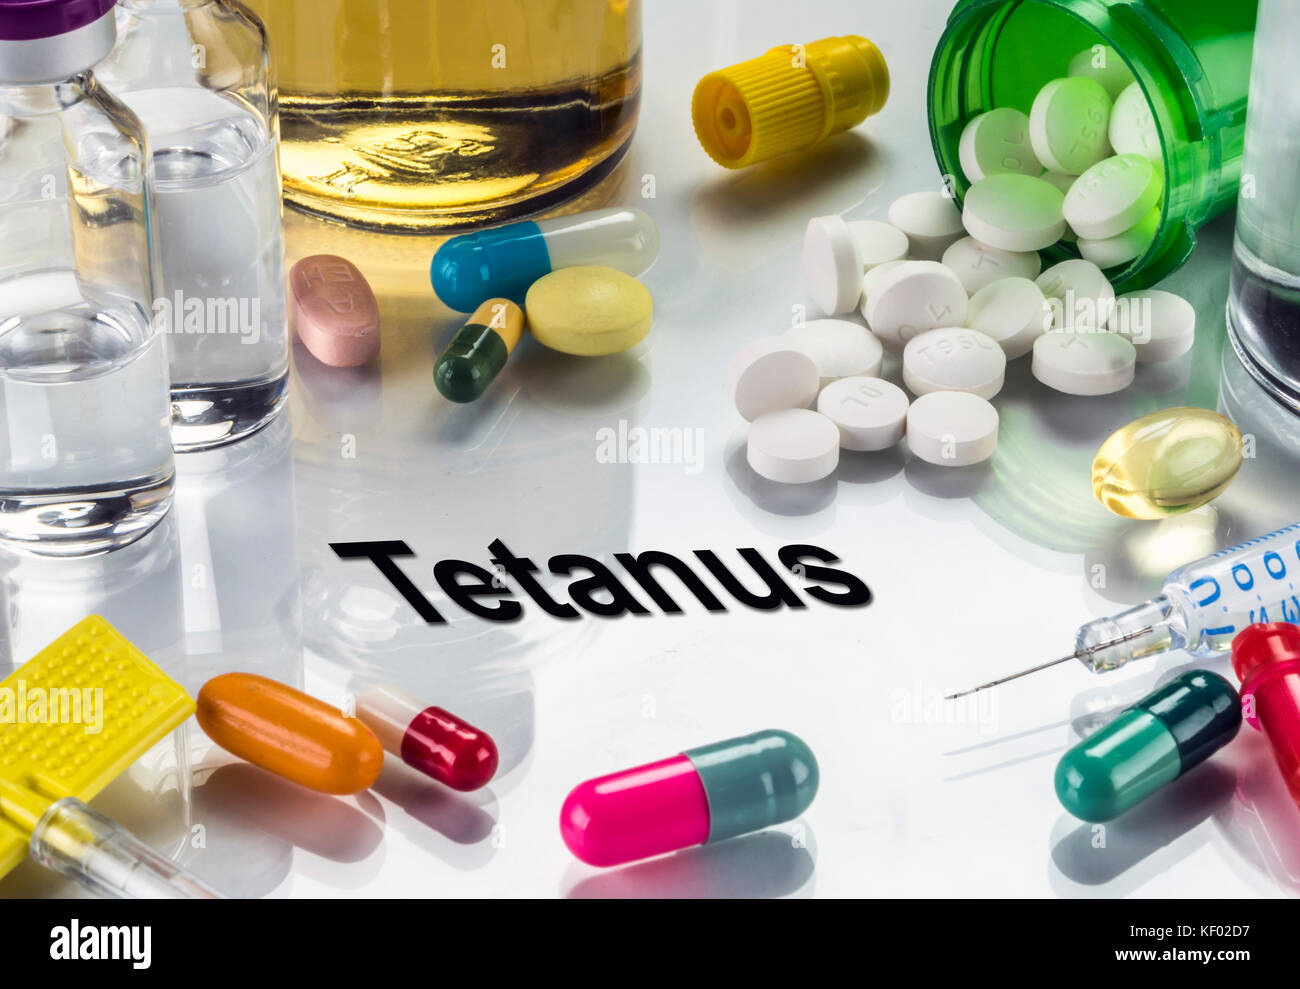 Tetanus, medicines as concept of ordinary treatment, conceptual image Stock Photo